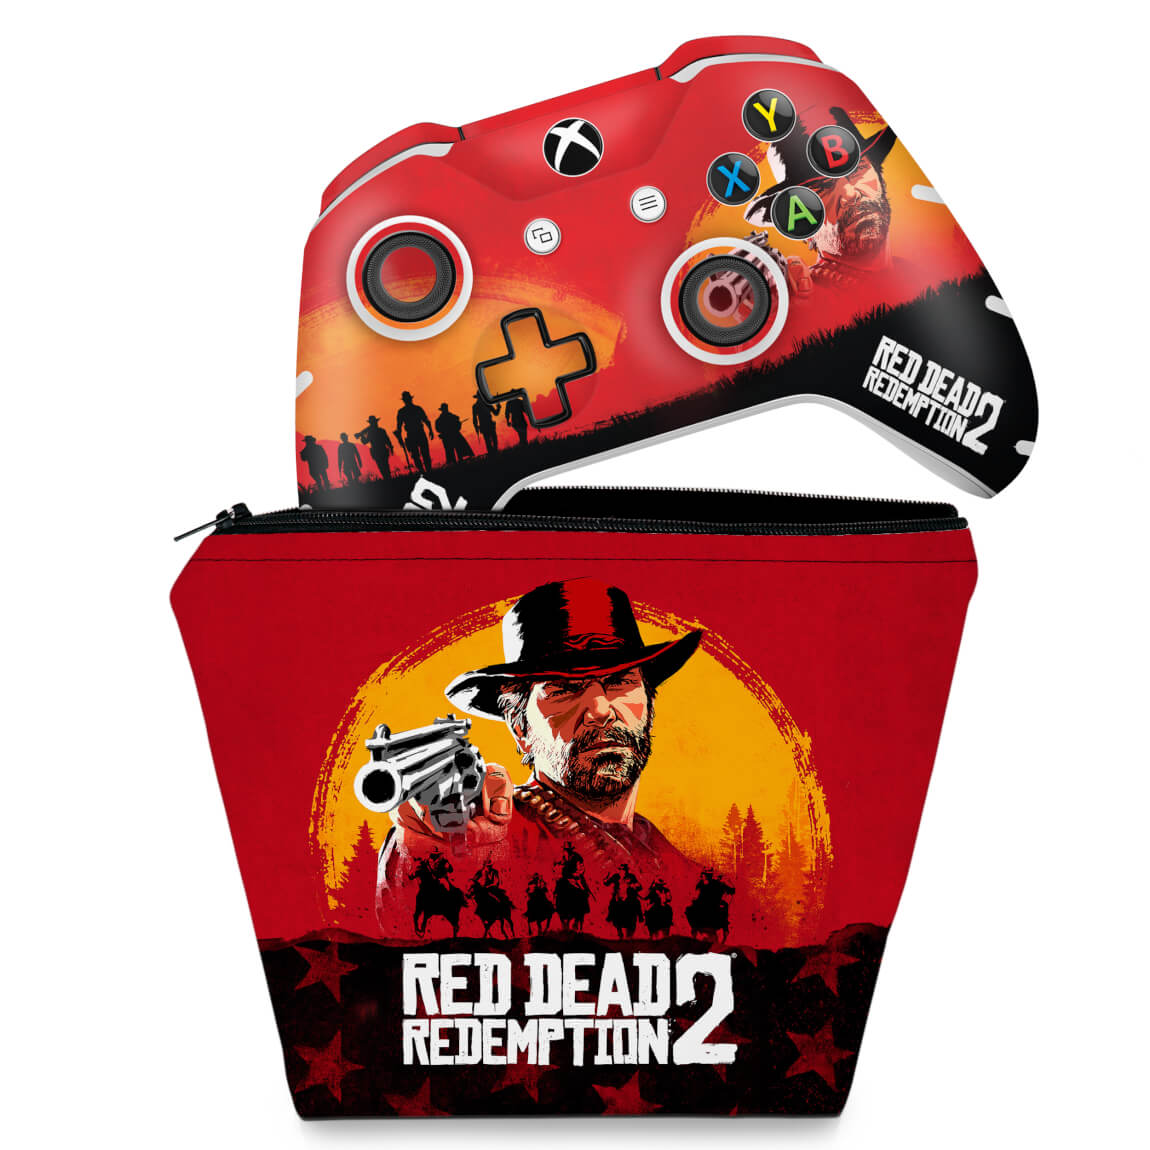 KIT Capa Case e Skin Xbox One Slim X Controle - Red Dead Redemption 2 - Pop  Arte Skins